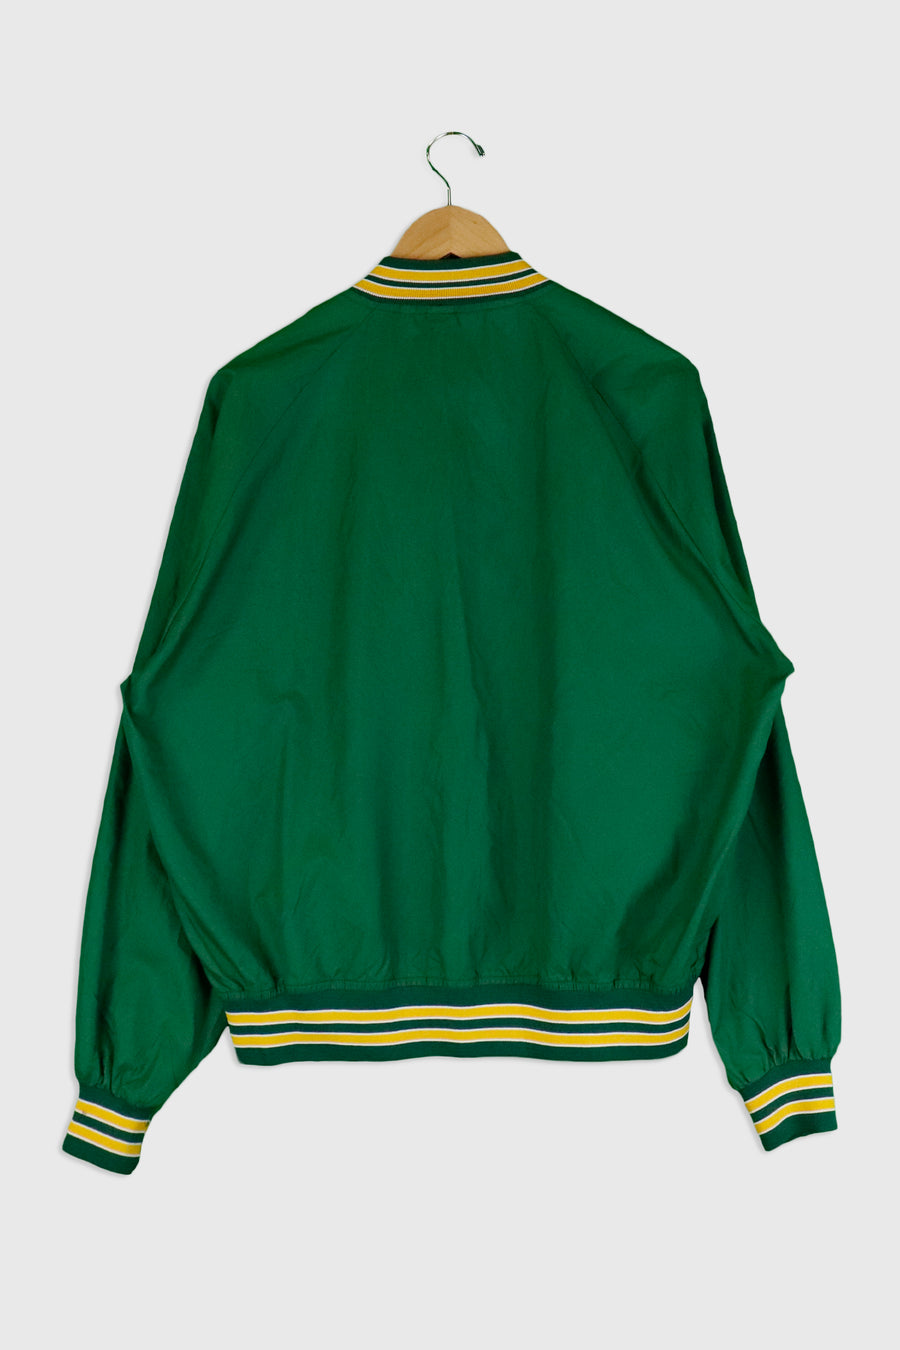 Vintage NFL Packers Varcity Button Up Lightweight Jacket Sz XL